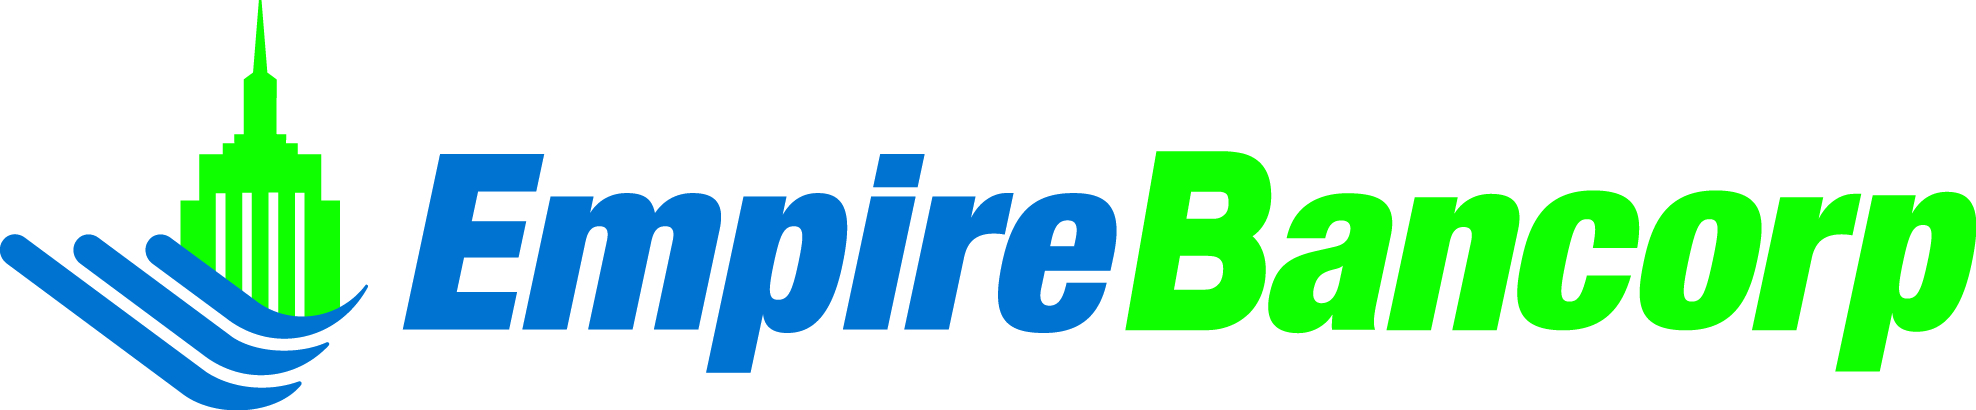 Empire_logo_Bancorp.jpg